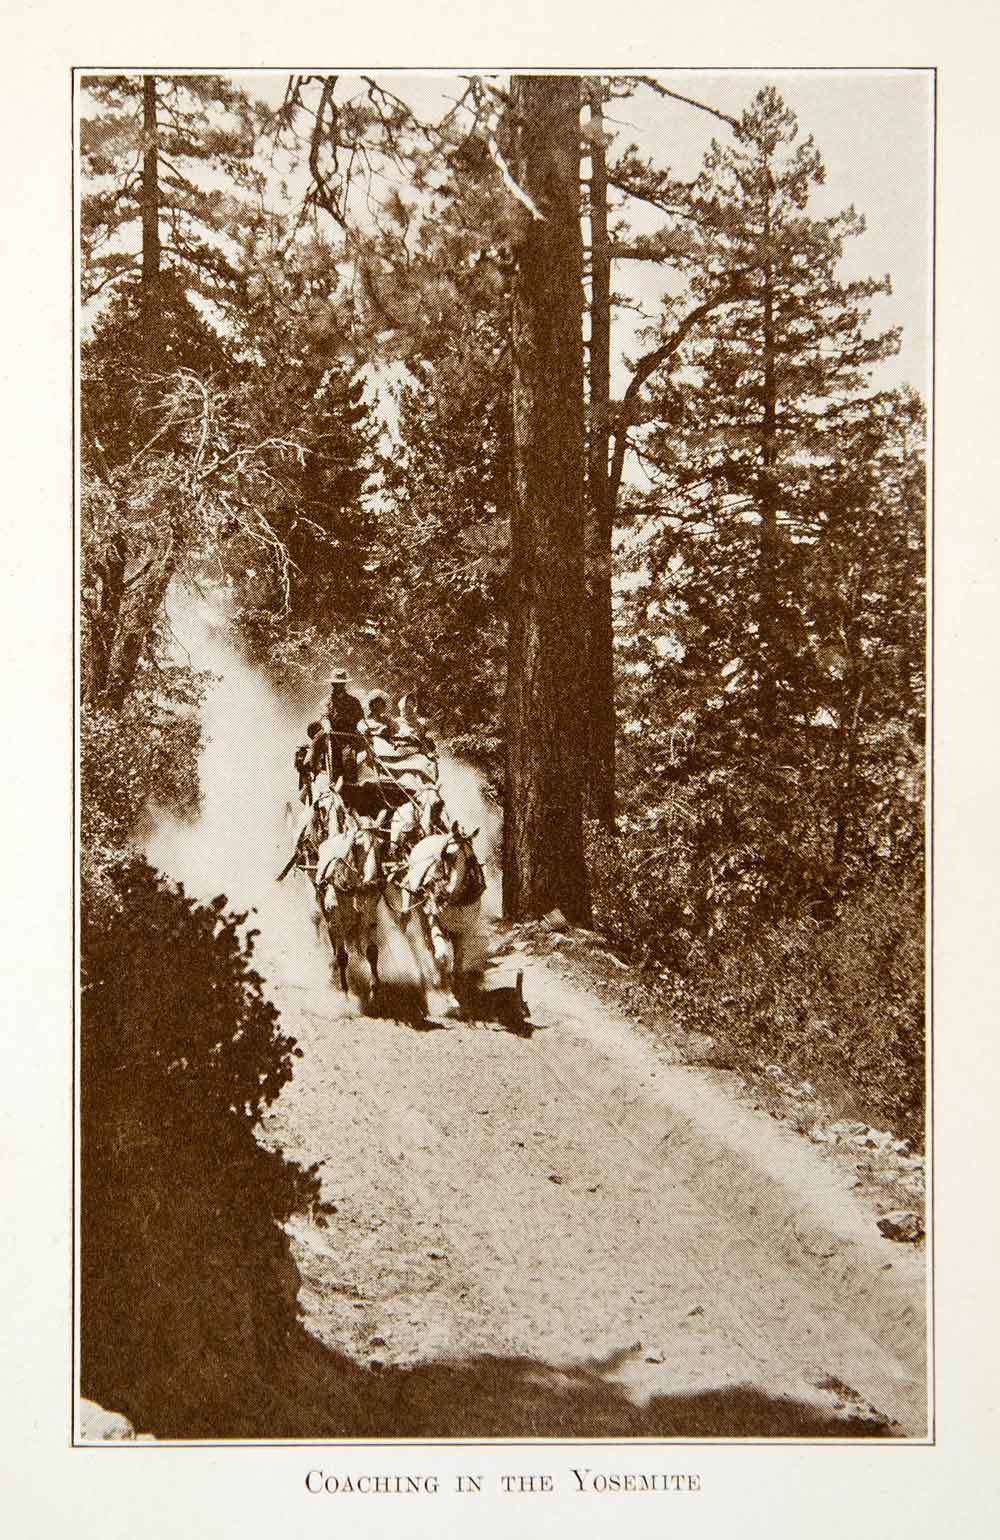 1916 Print Coach Yosemite Trail National Park Path Historical Image Nature XGHD3